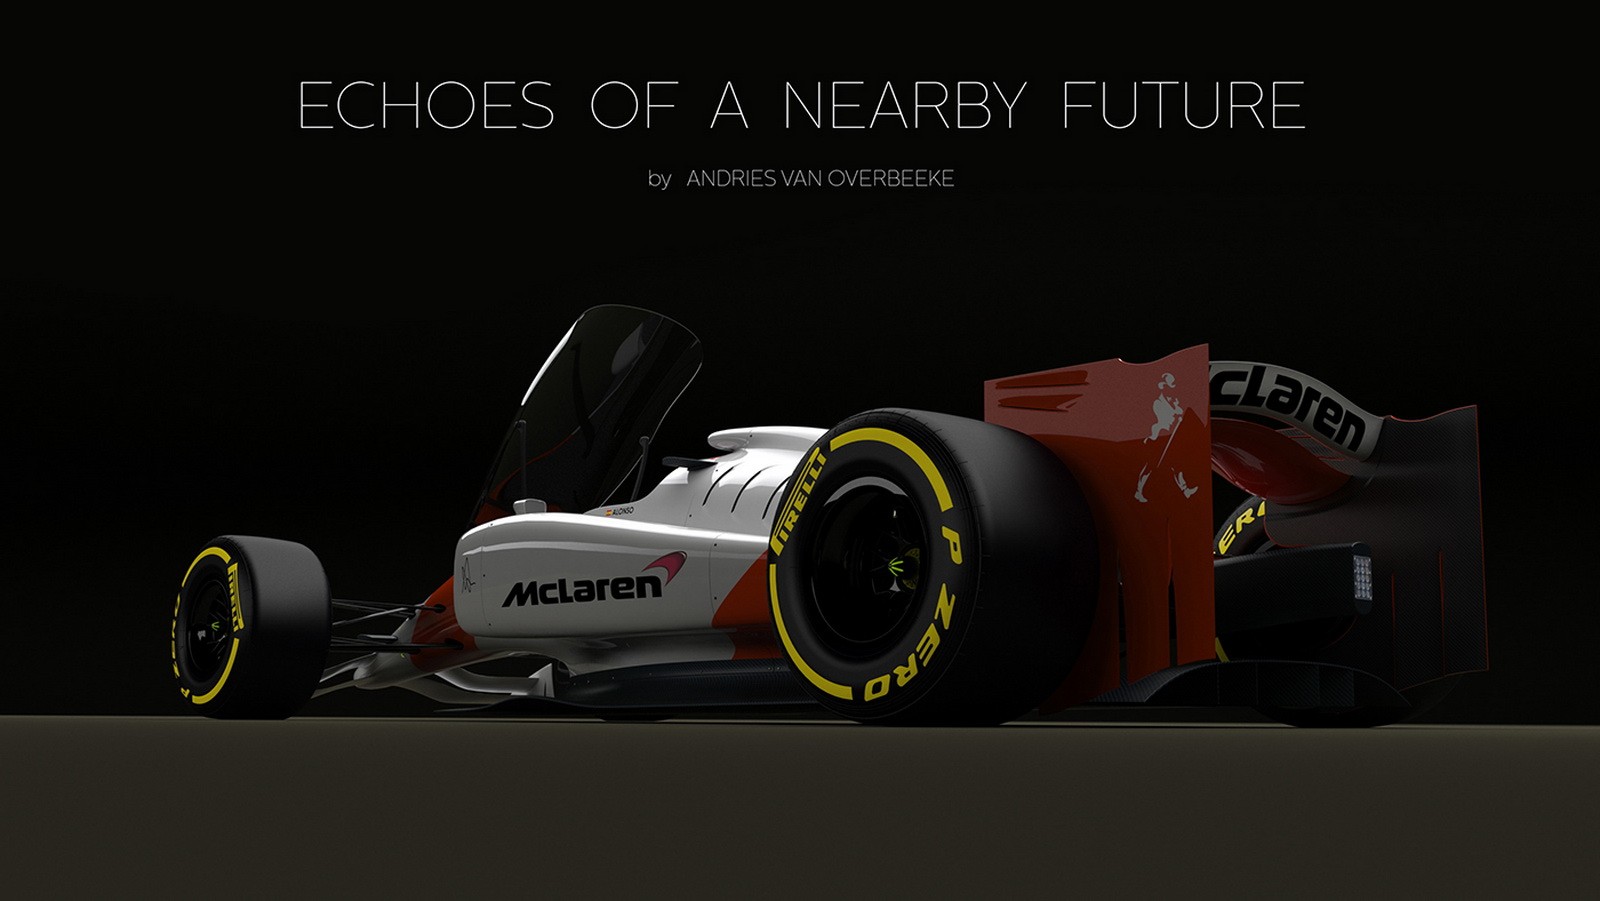 future-formula-1-concept-earns-closed-cockpit-honda-mclaren-livery-photo-gallery_10